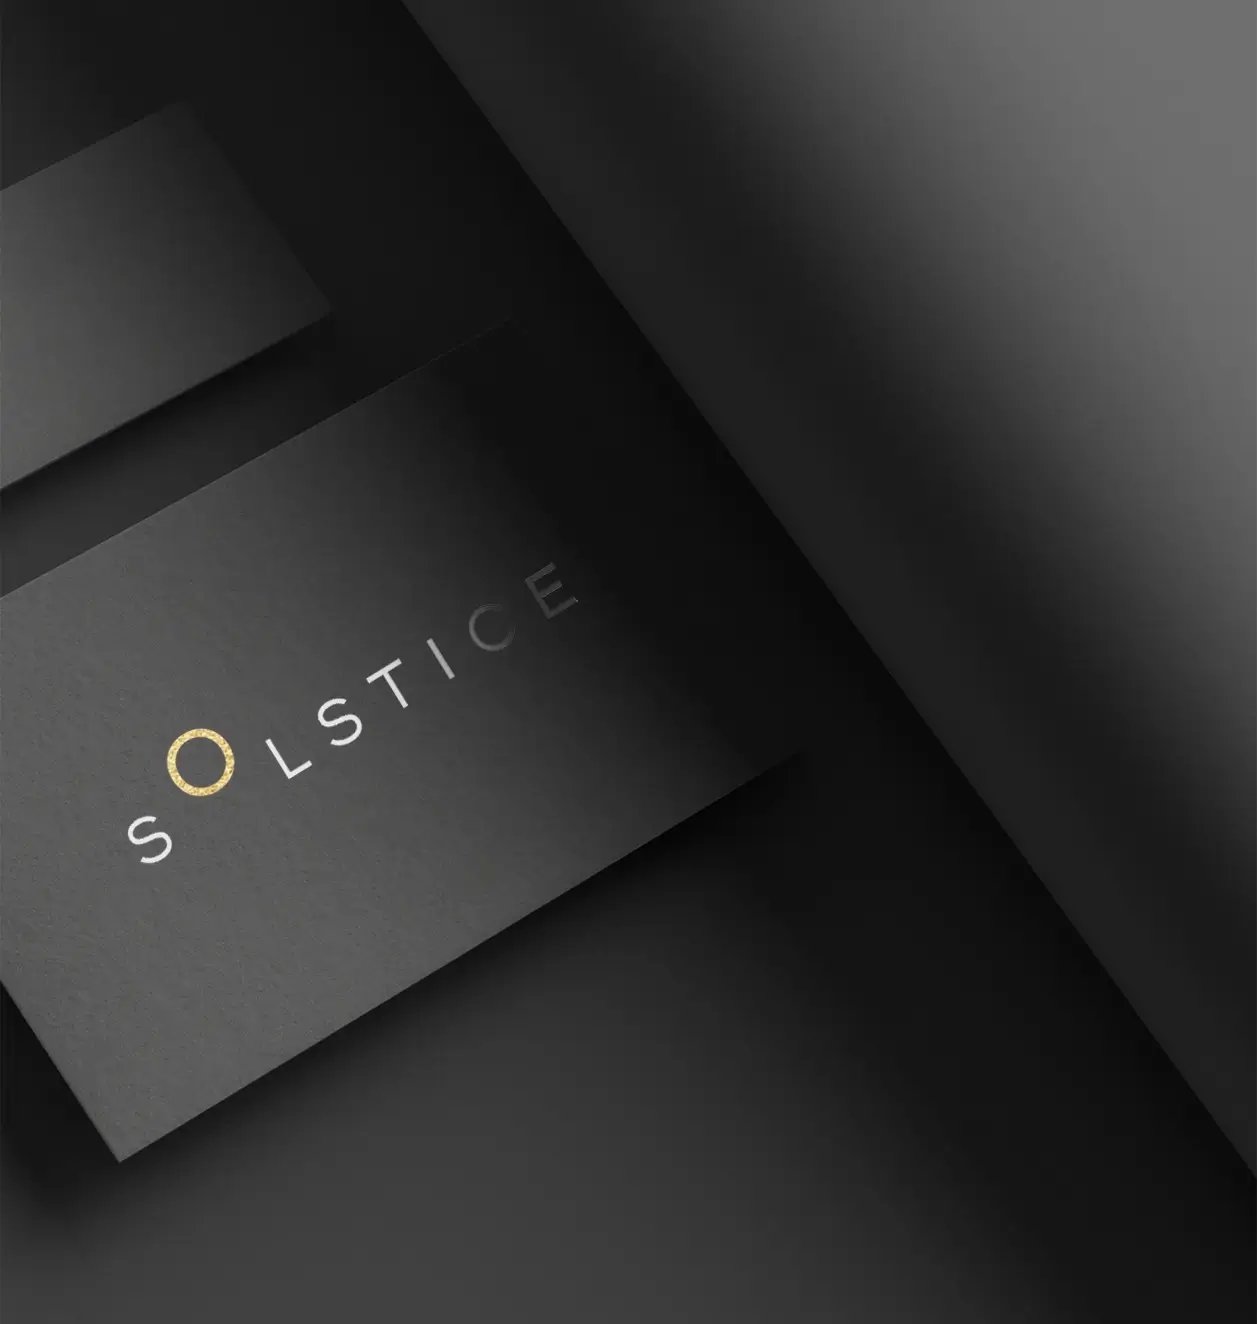 Solstice business card design